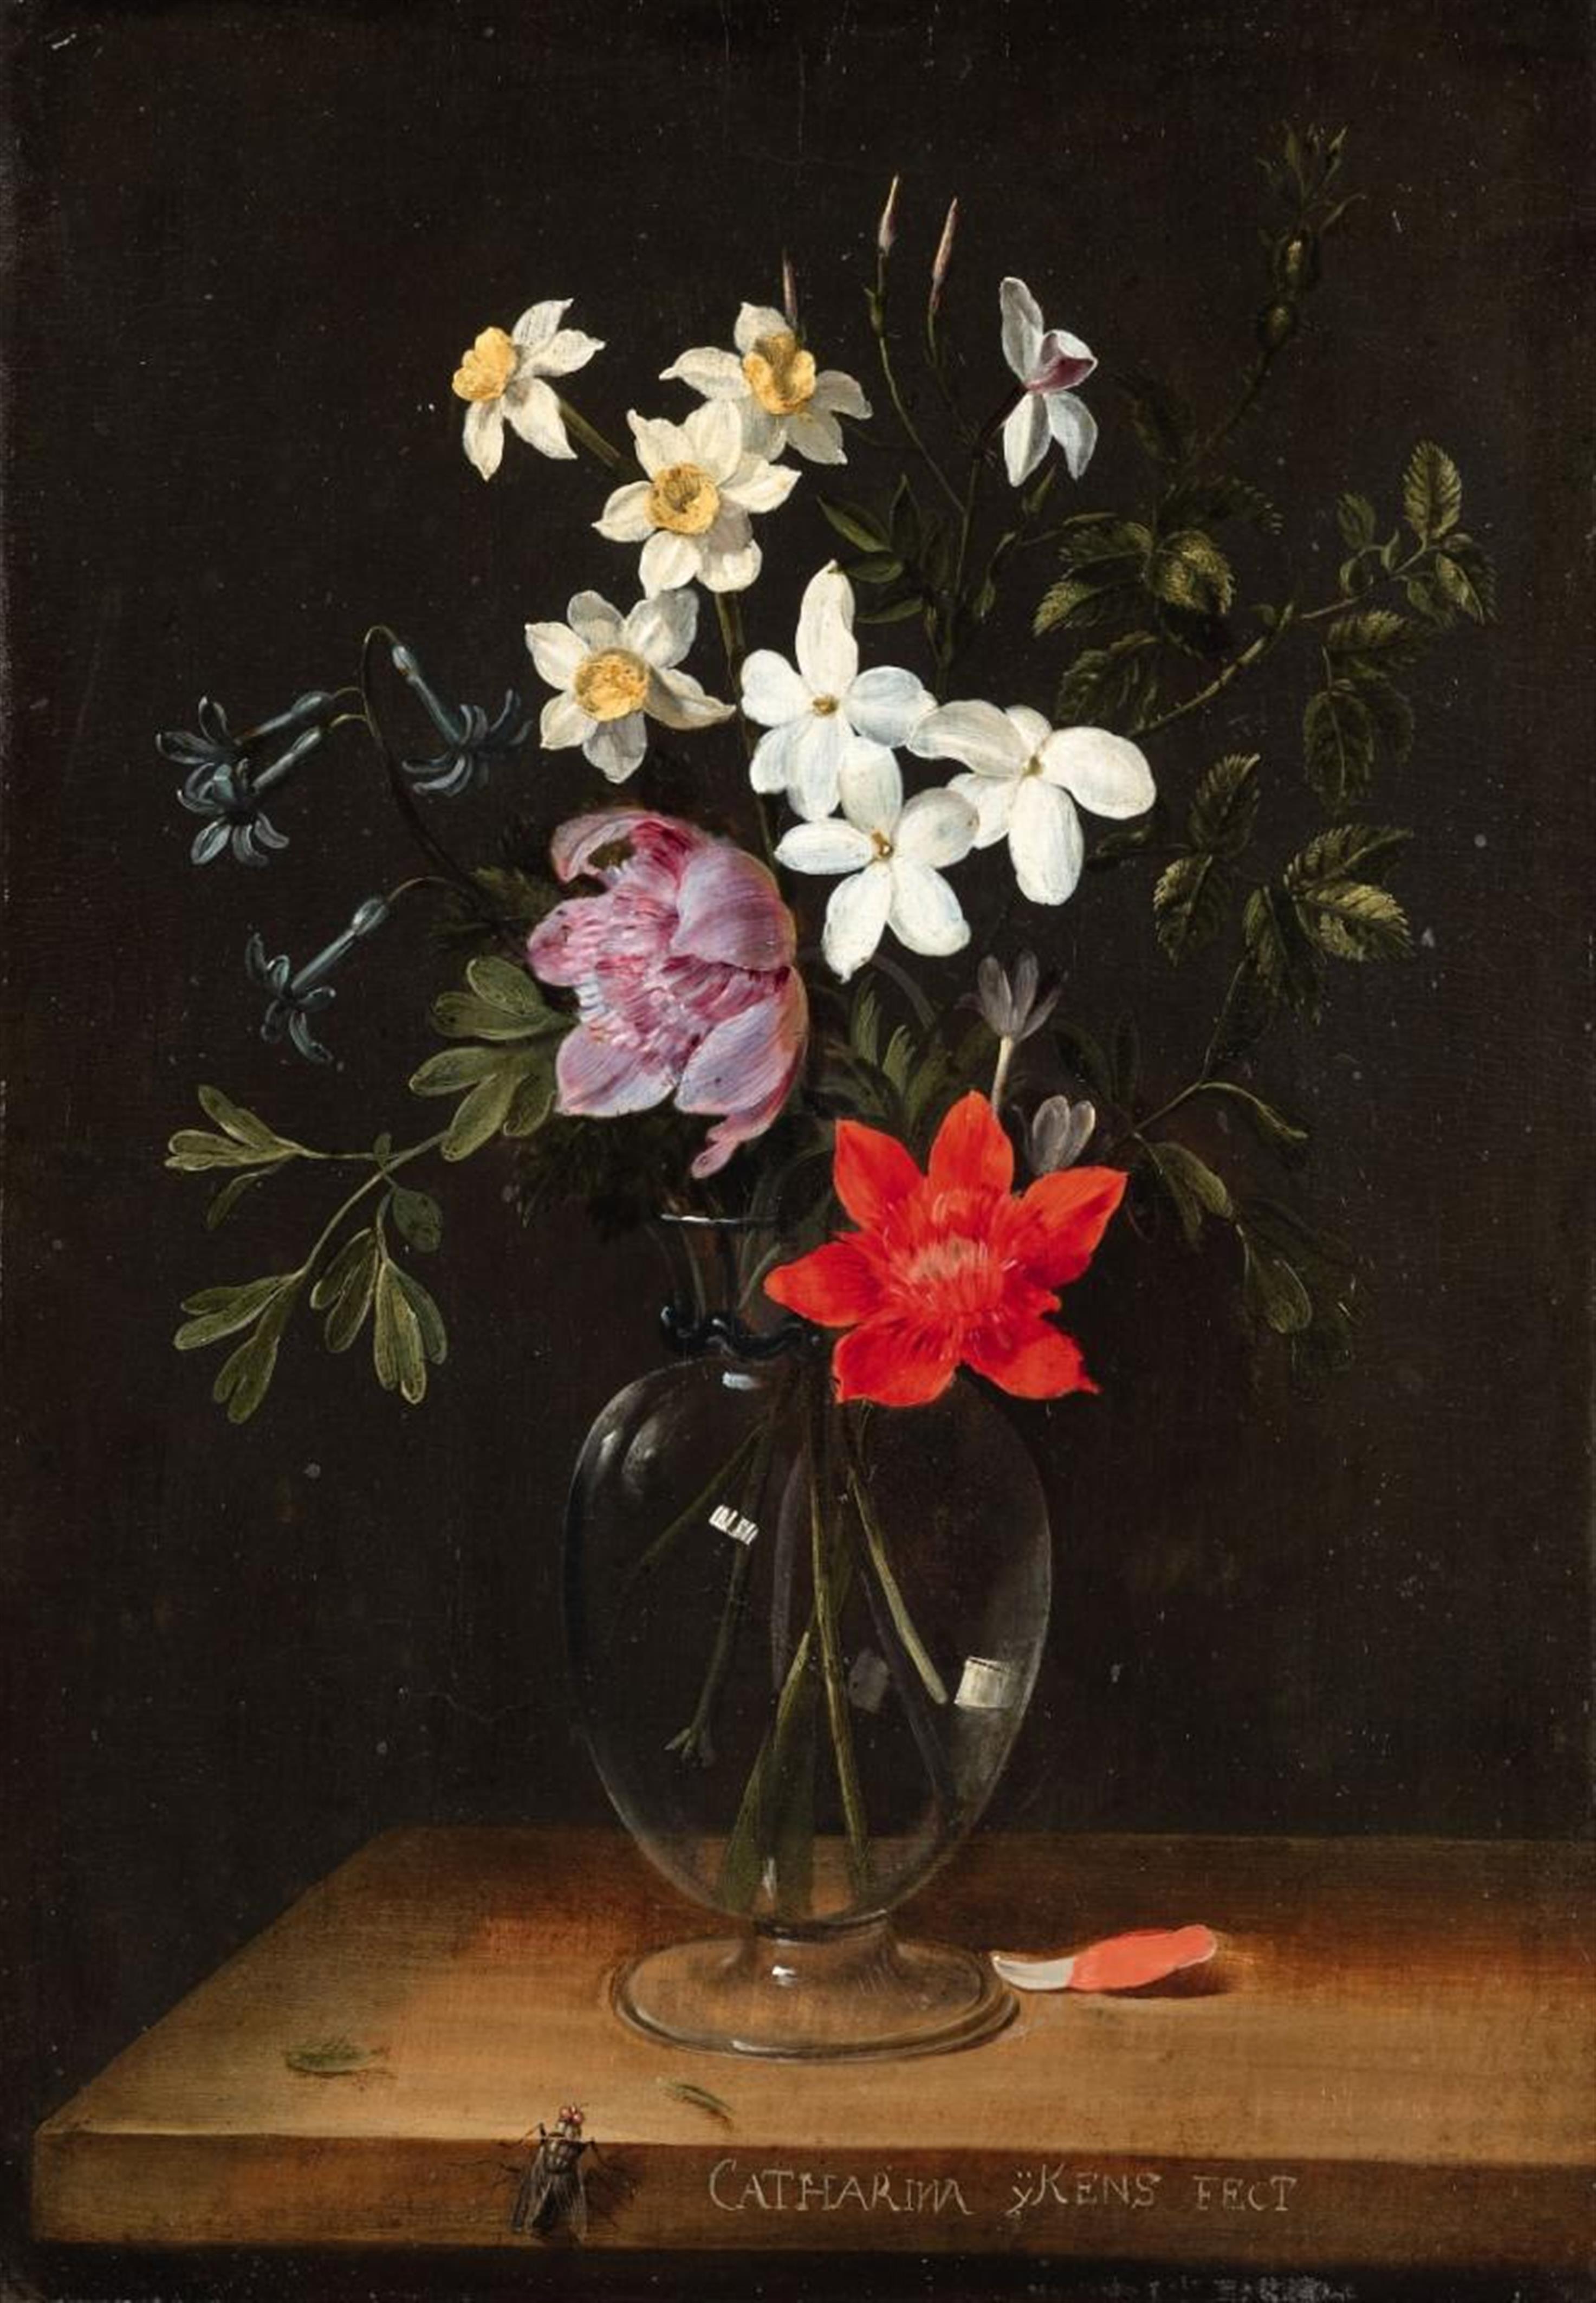 Catharina Ykens - A Floral Still Life - image-1